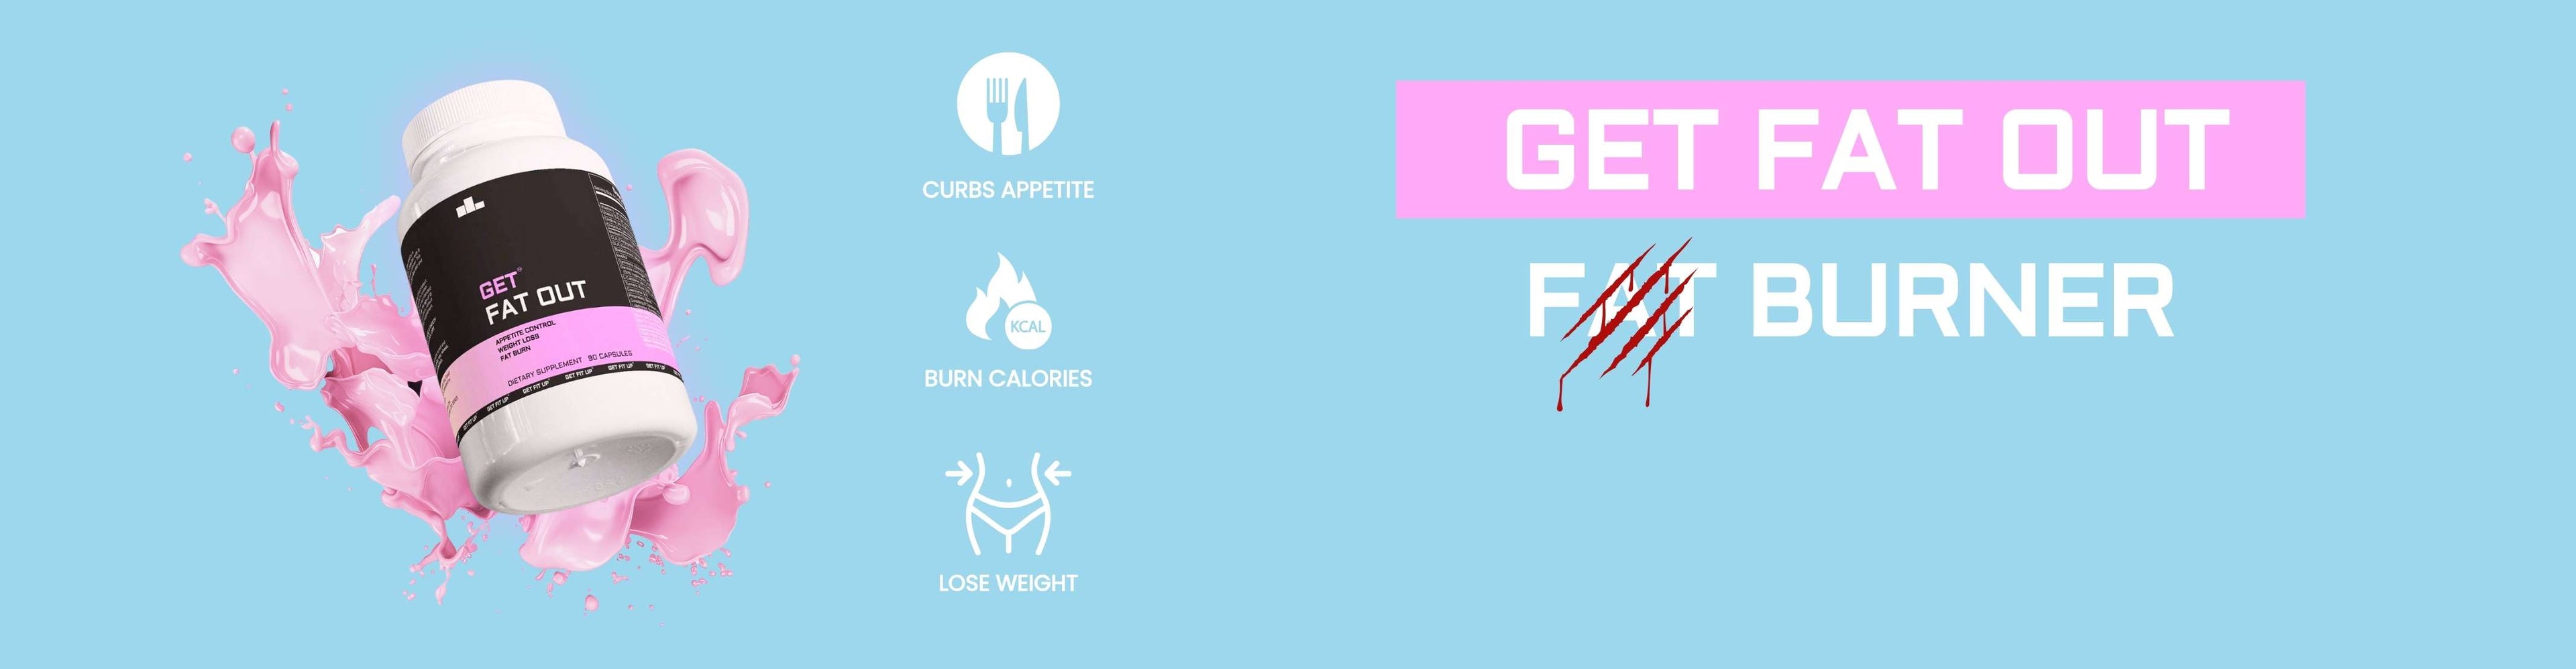 fat_burner-weight_loss_getfitup